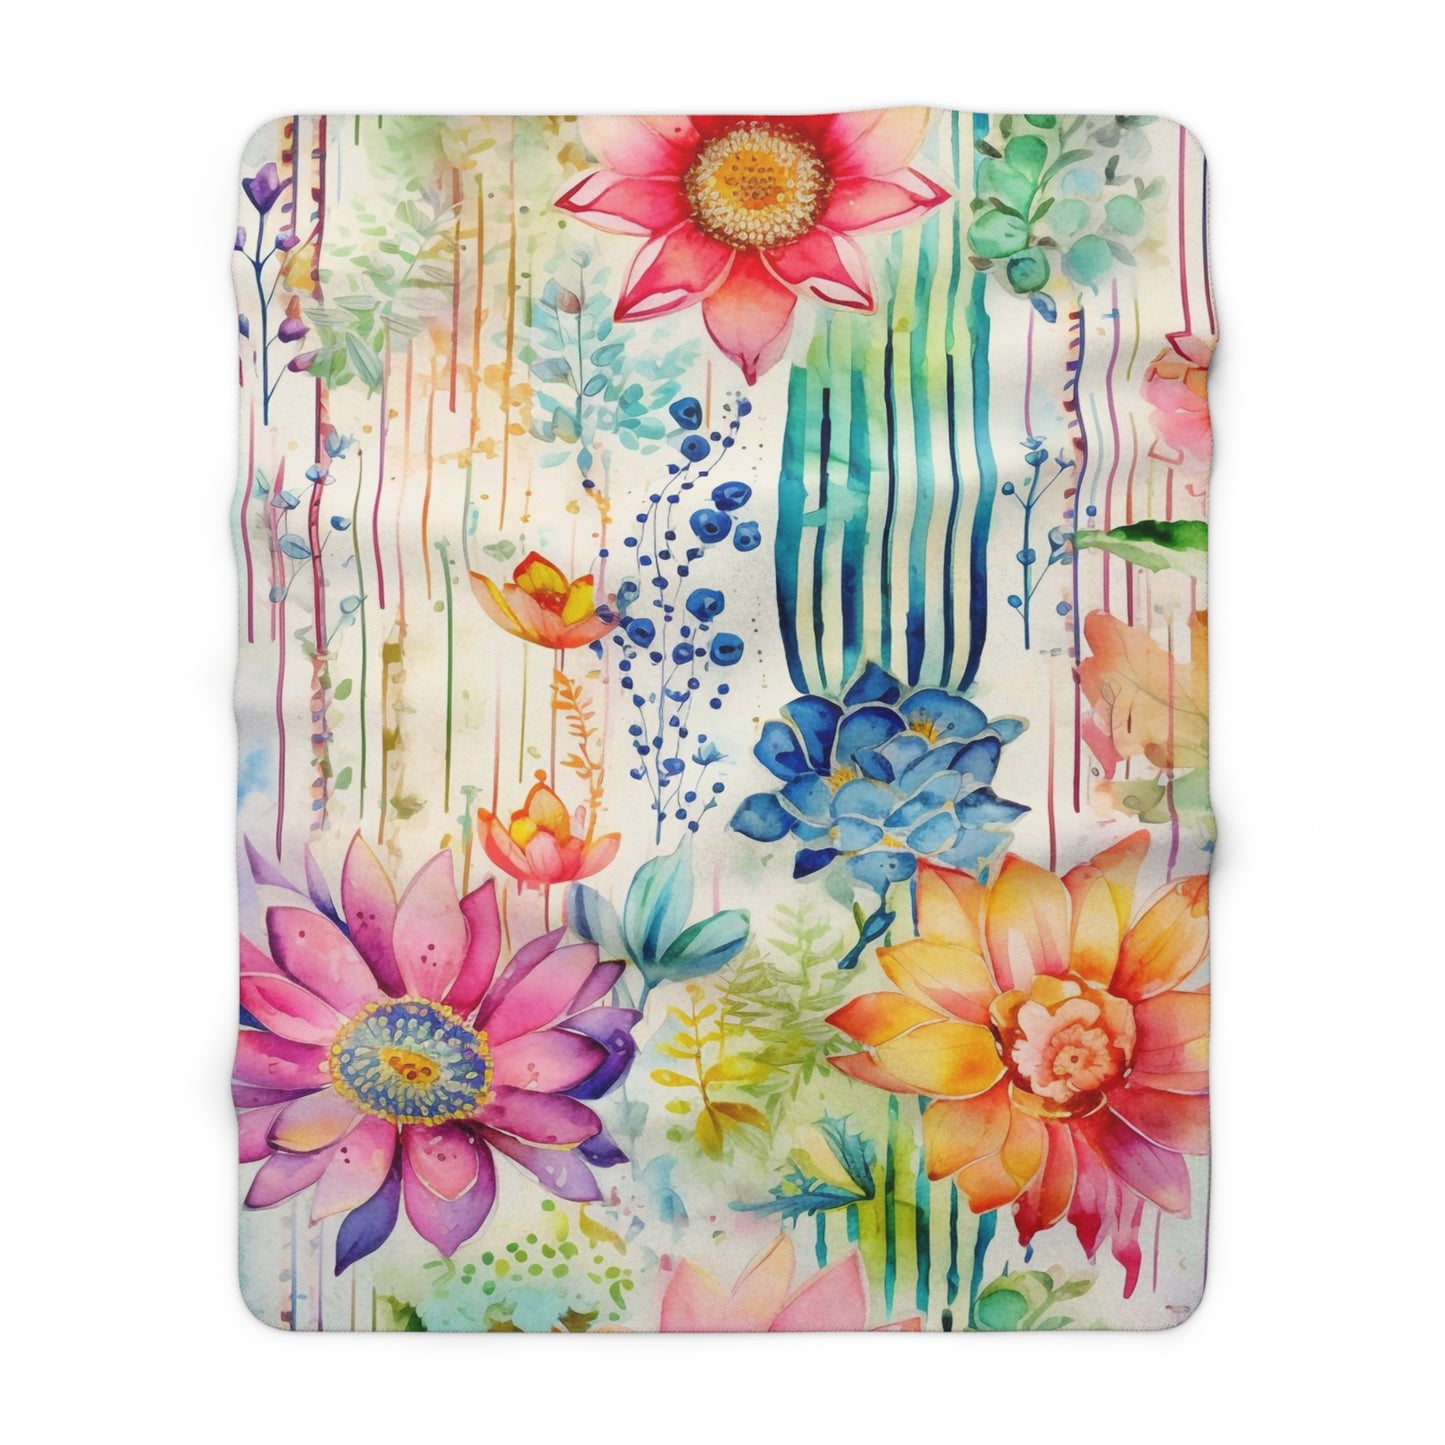 Cactus Design Art, Cactus Style, Cactus Flowers, Sherpa Fleece Blanket